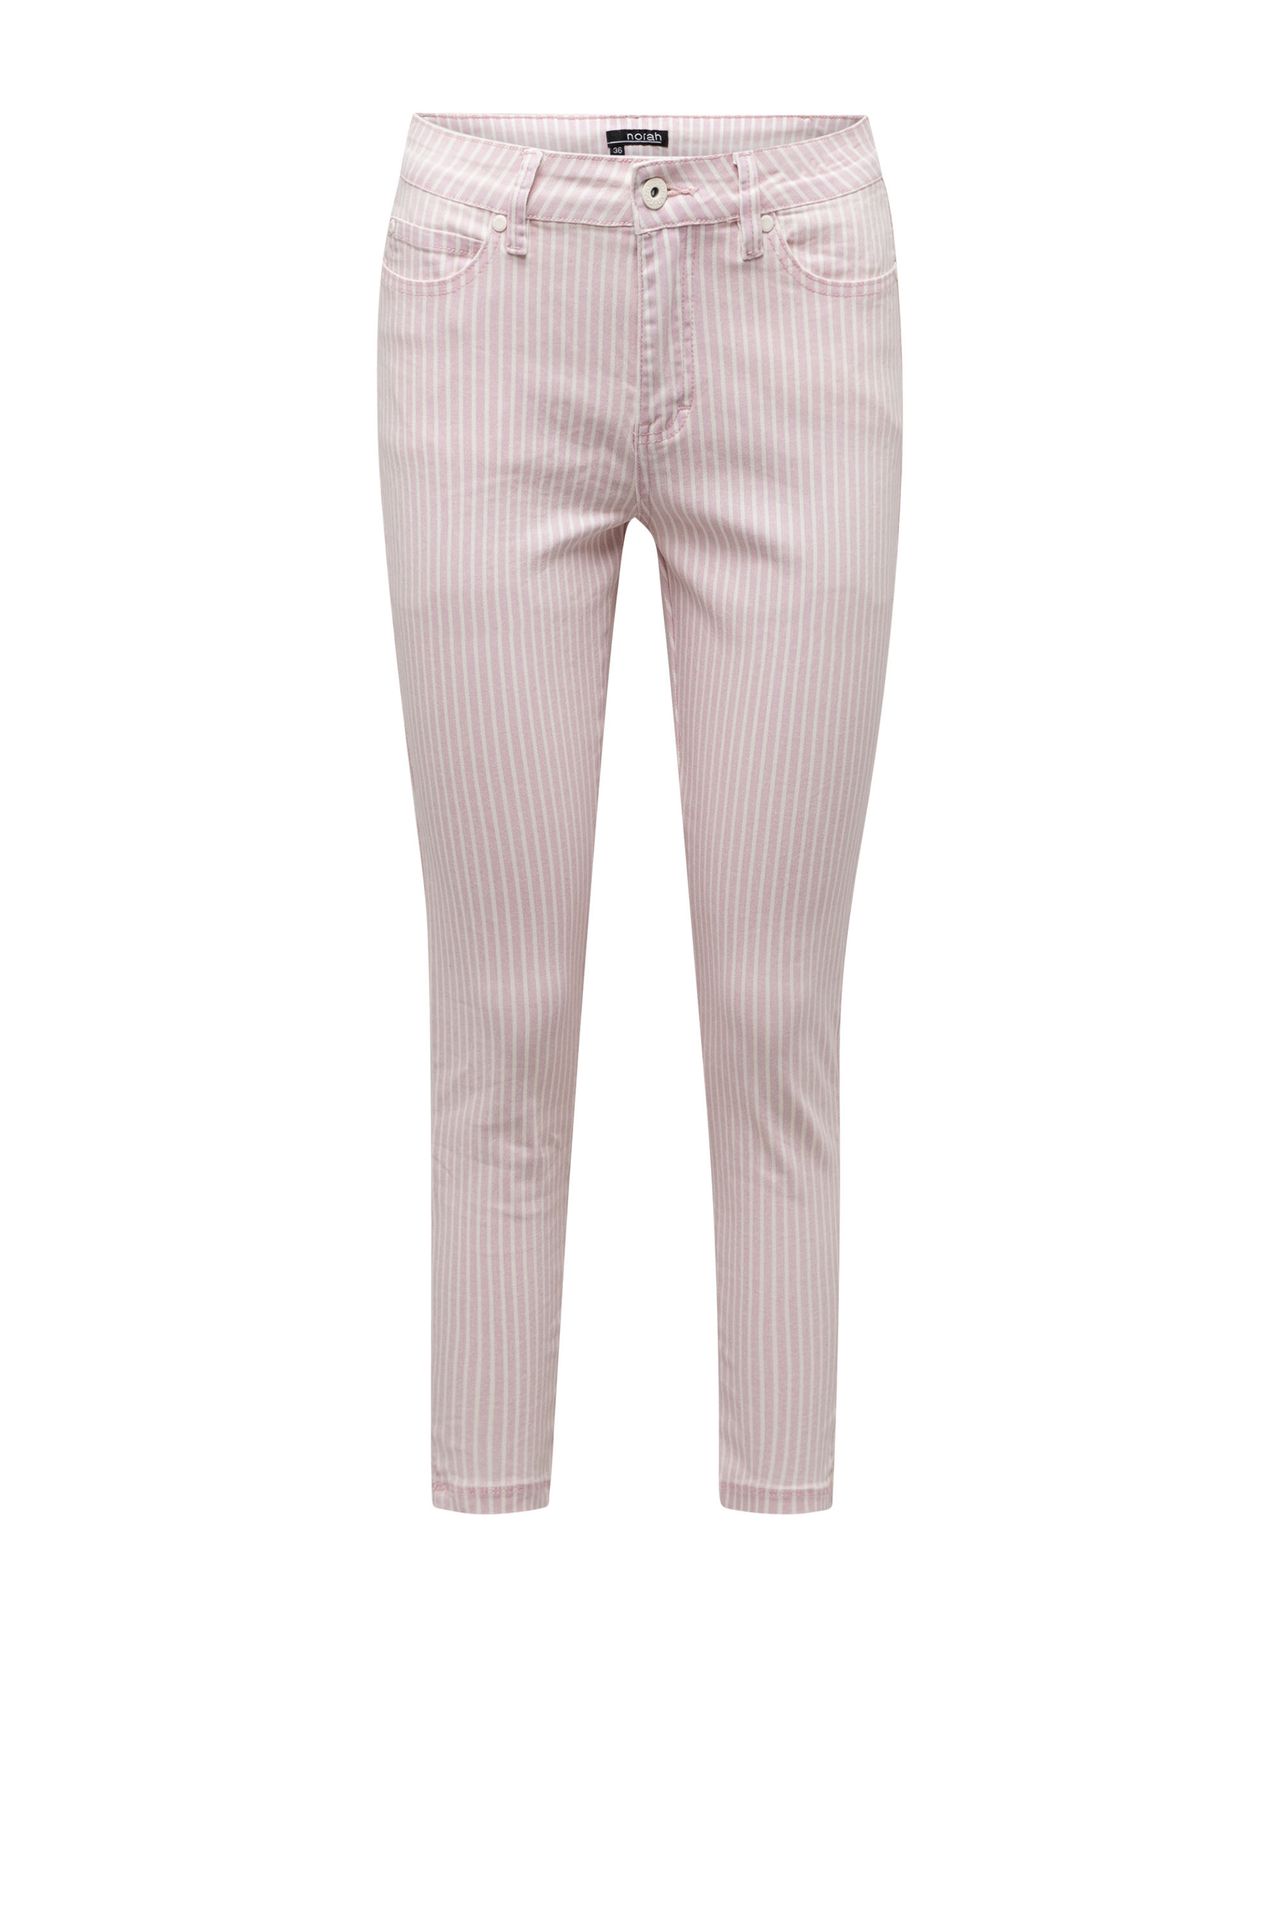  Roze/wit gestreepte broek pink/white 213717-931-46